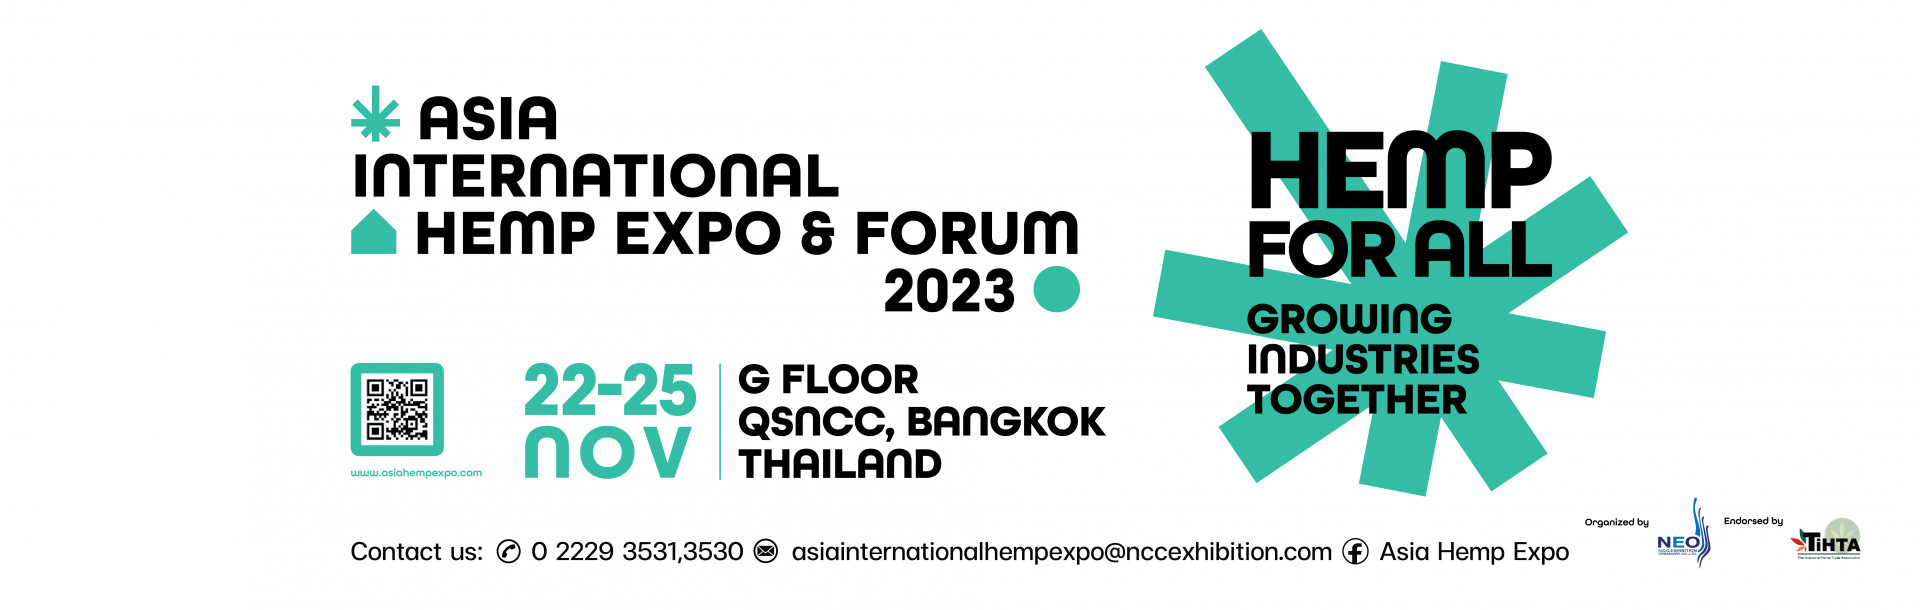 ASIA INERNATIONAL HEMP EXPO & FORUM 2023